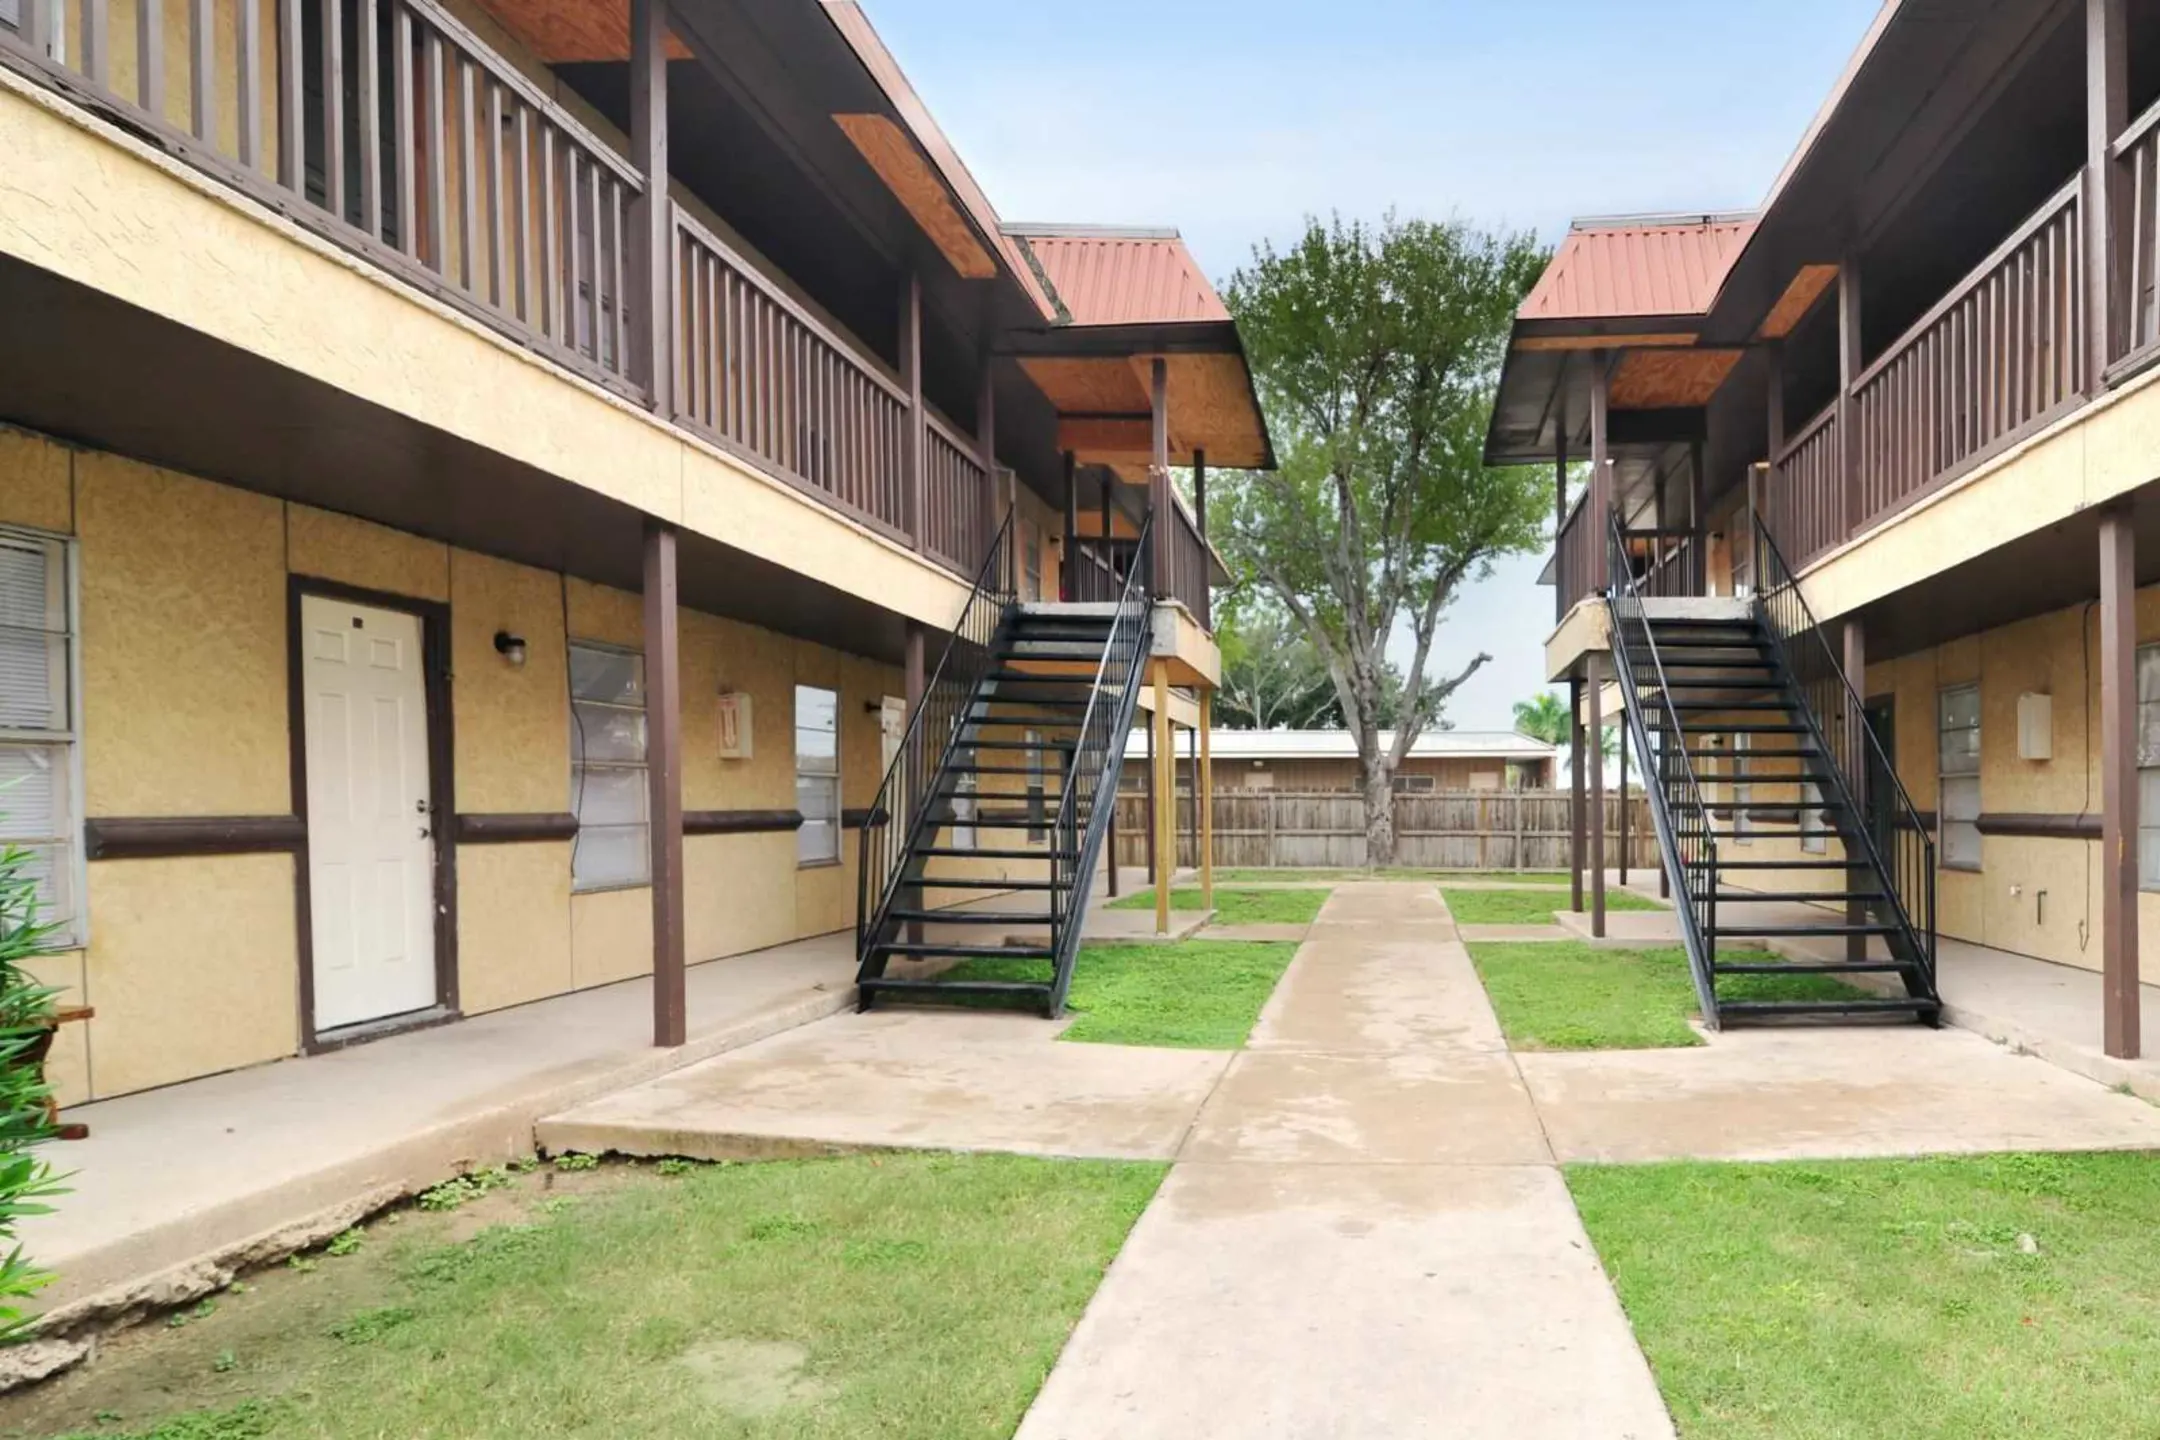 Building - Crossings Apartments - McAllen, TX